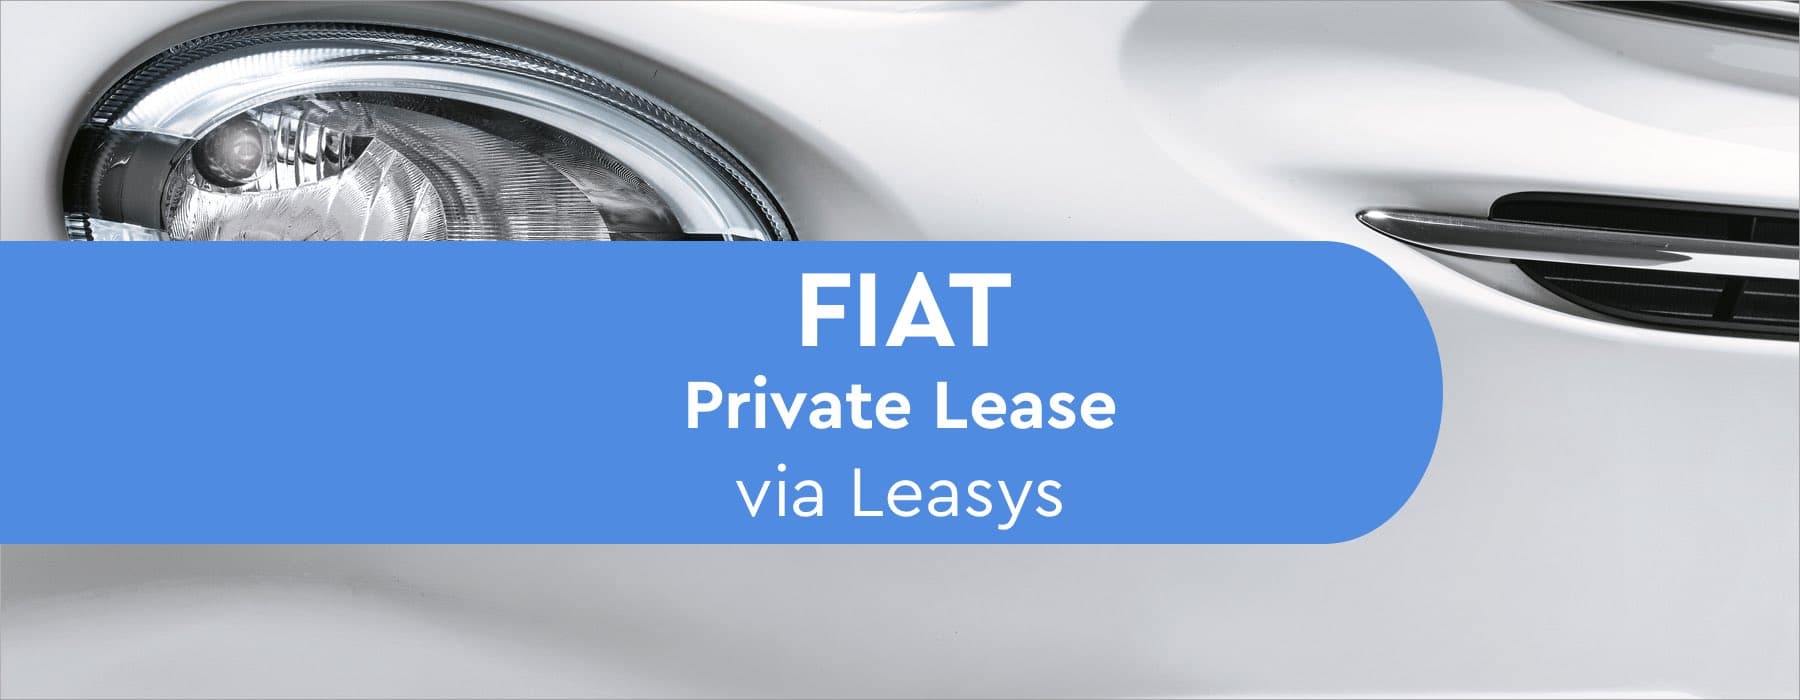 Leasys Fiat Private Lease